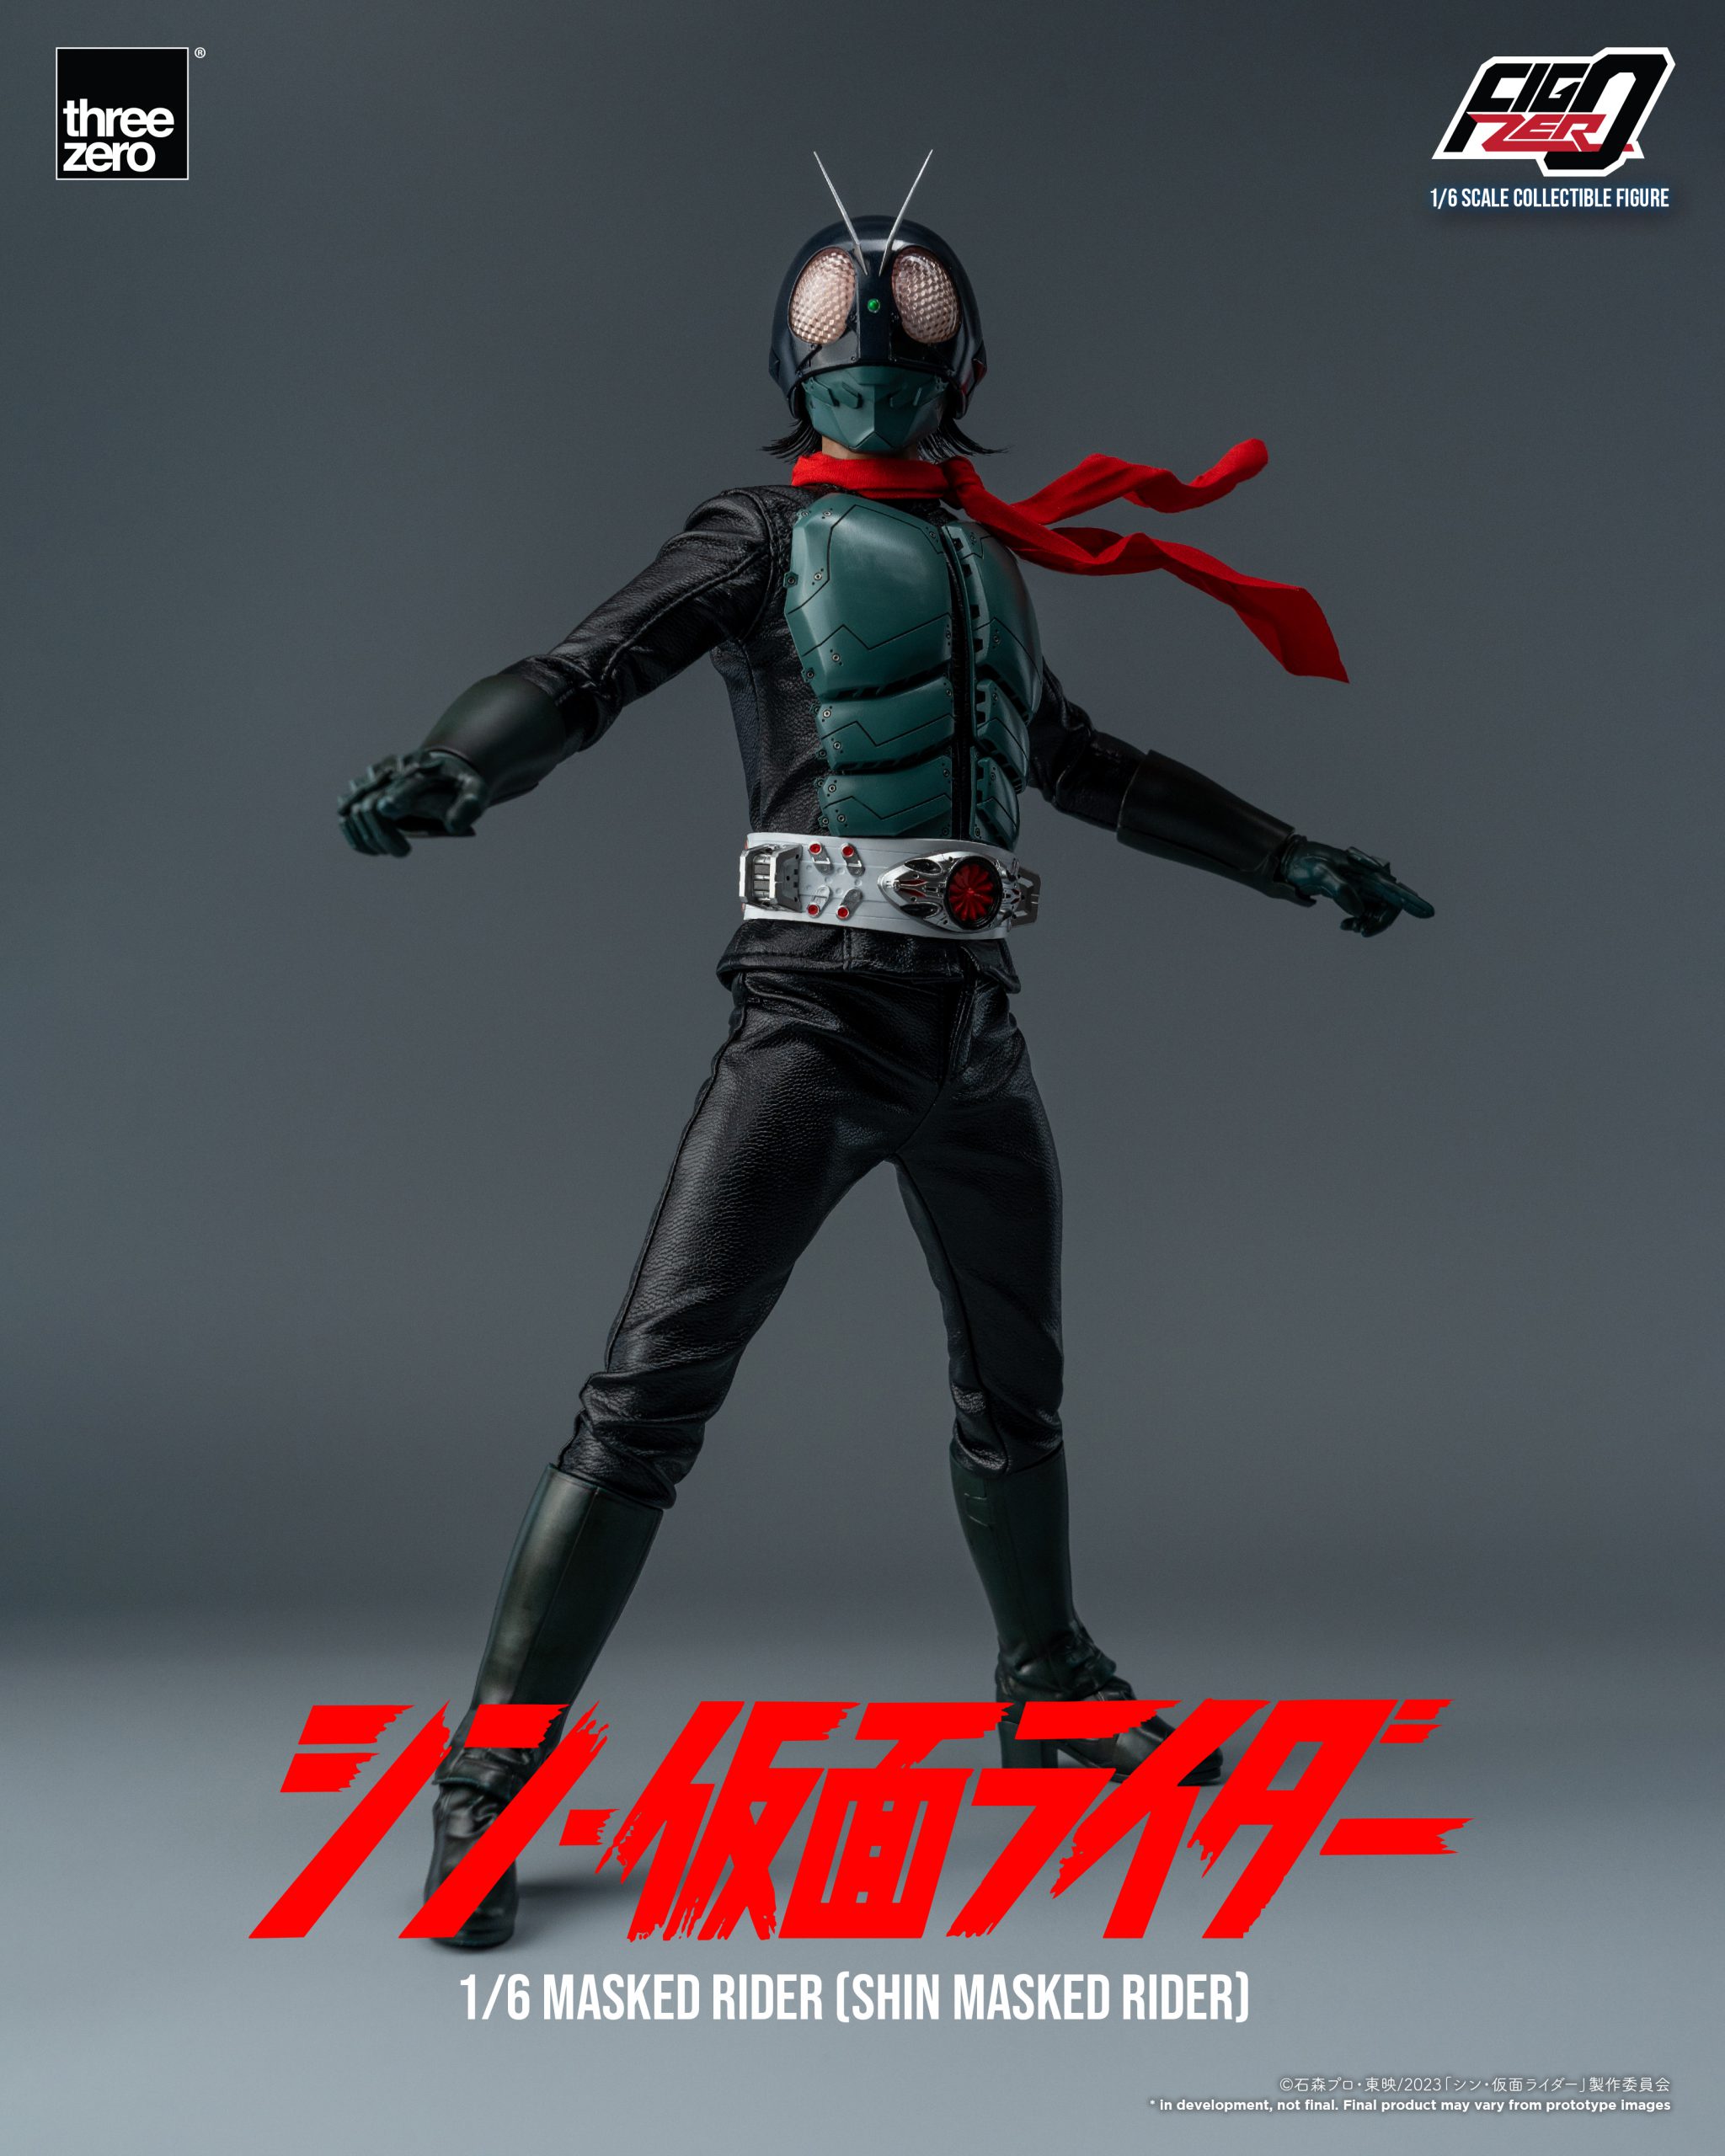 threezero - FigZero - Shin Masked Rider - Masked Rider (1/6 Scale)